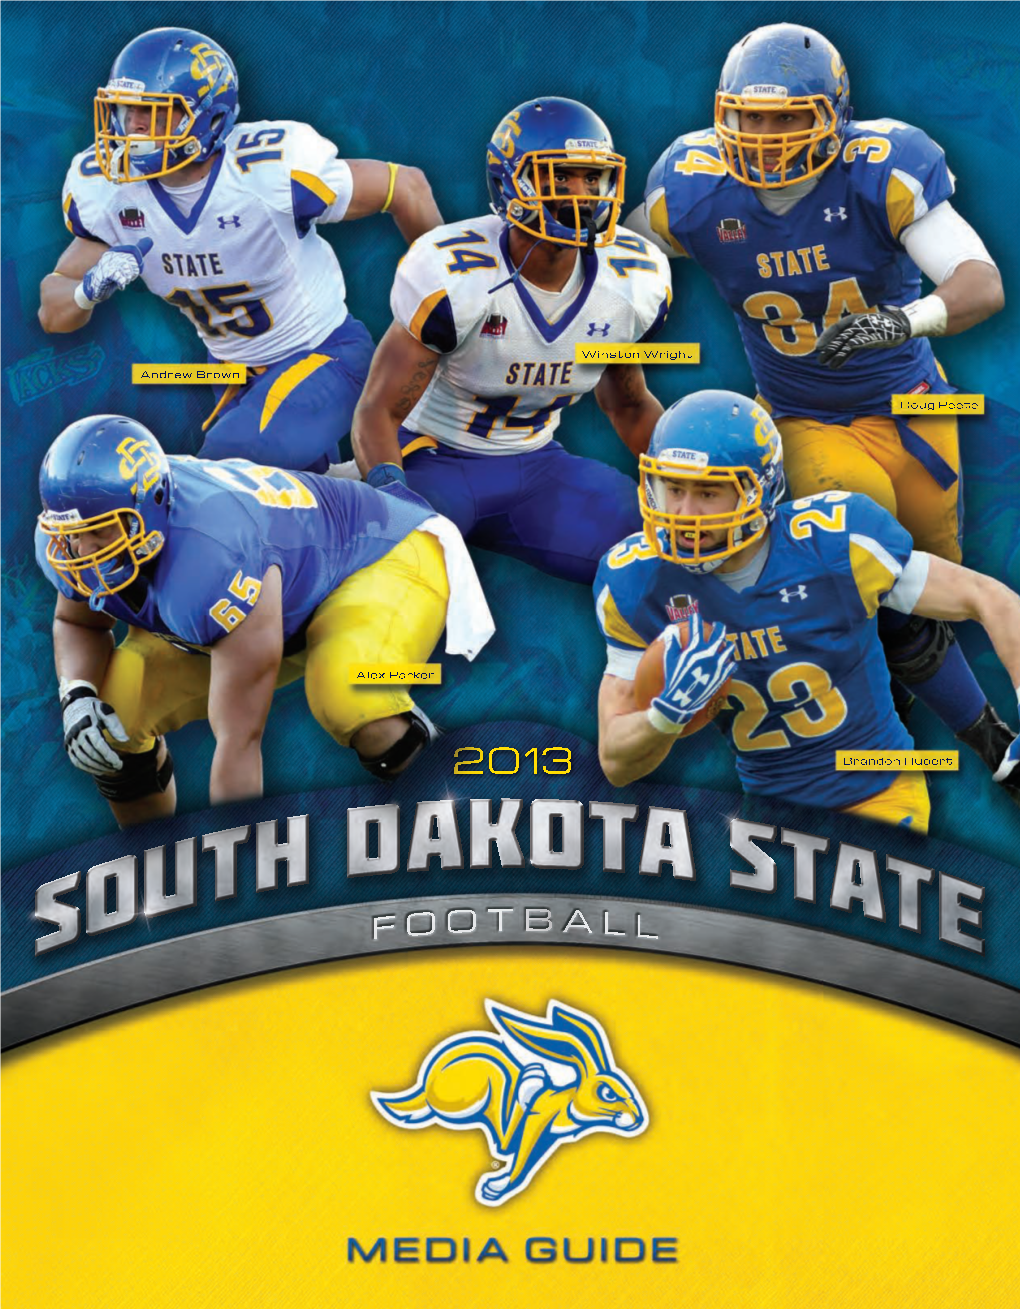 2013 South Dakota State Football Media Guide